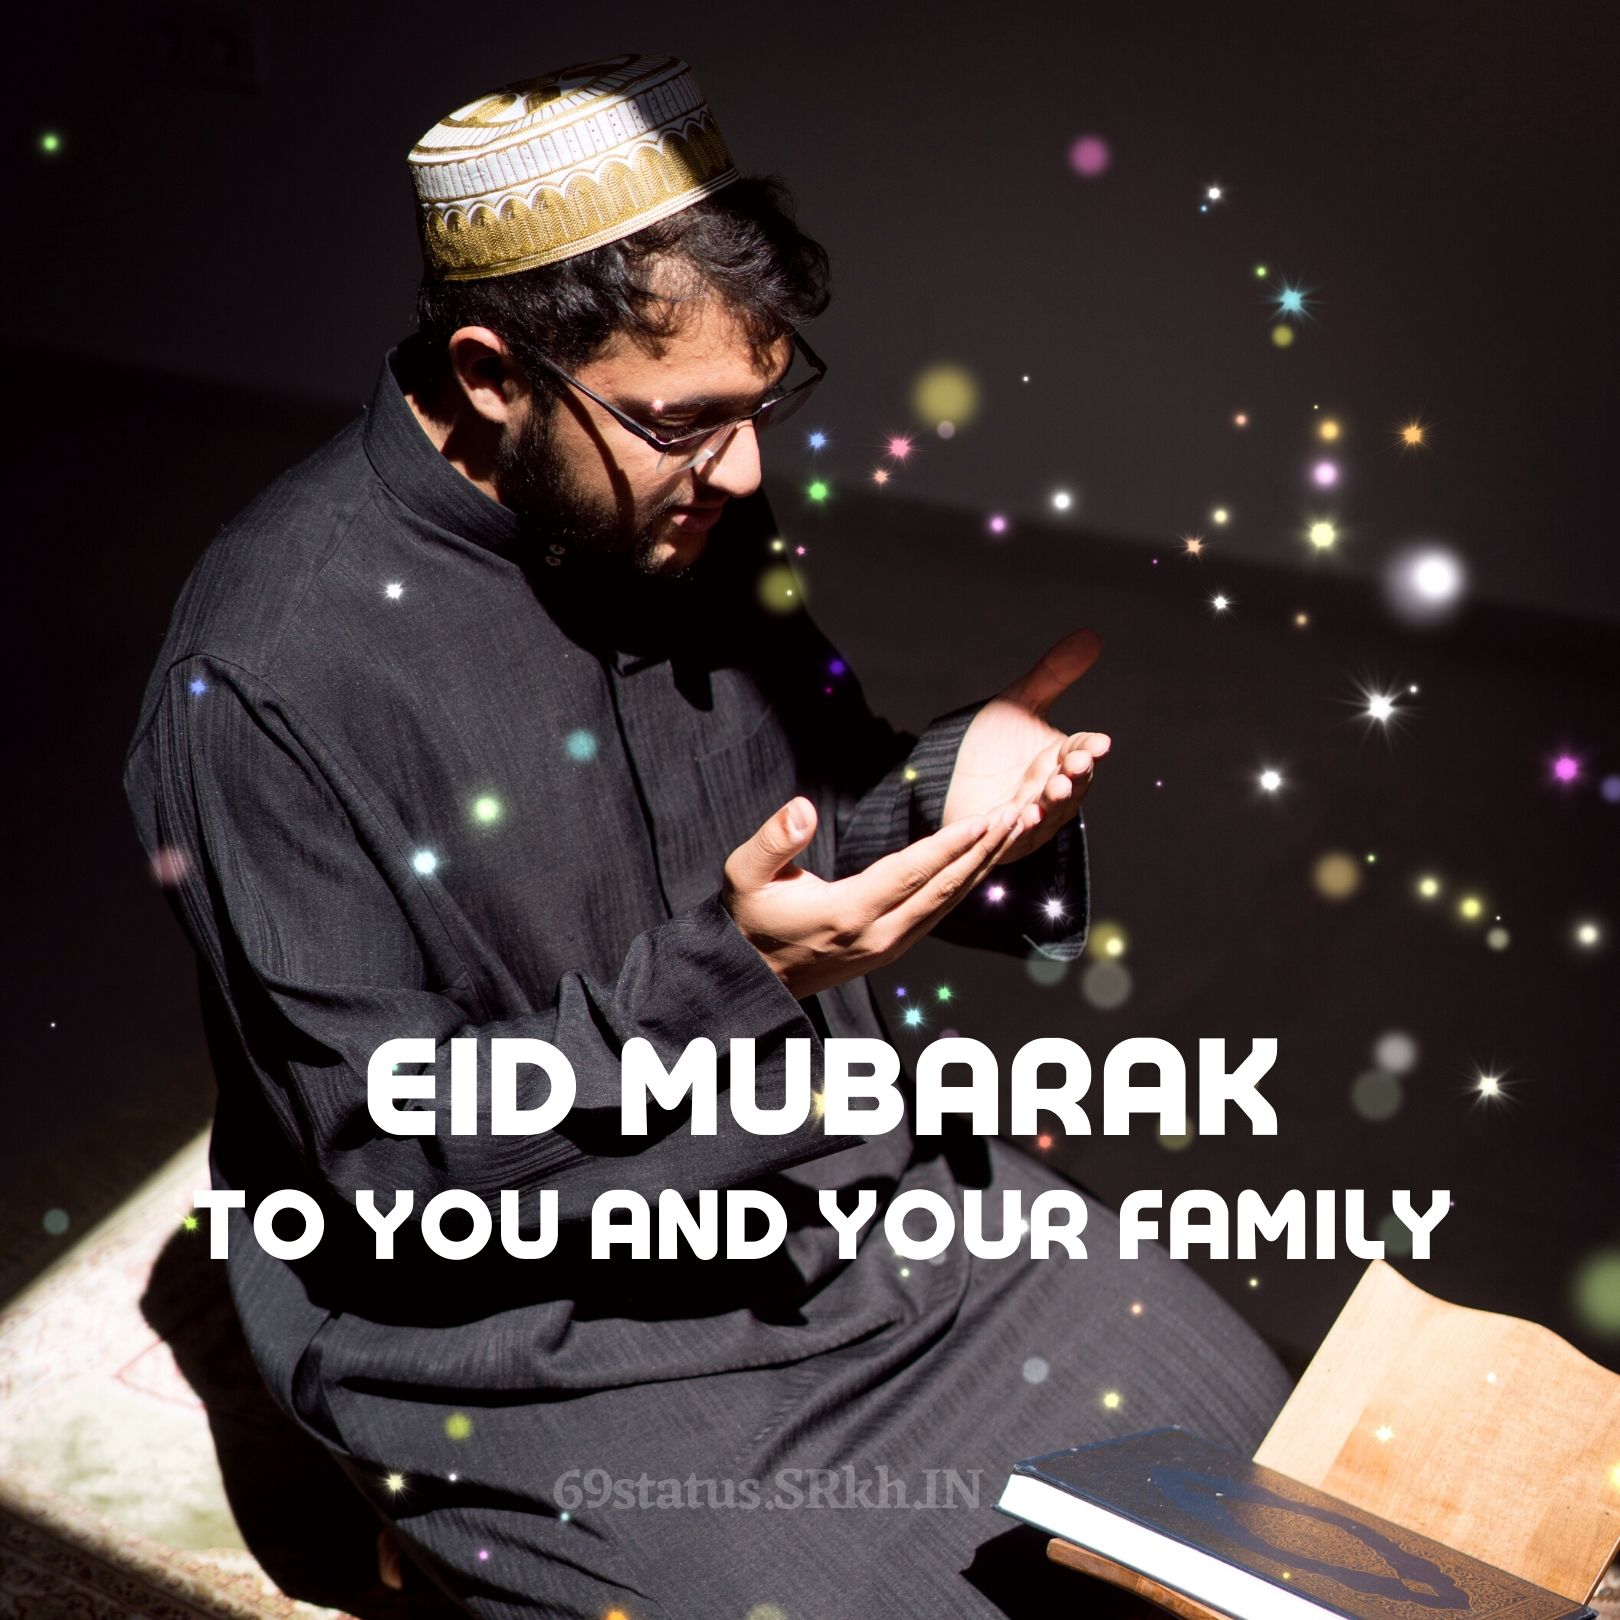 Eid Mubarak Prayer To Allah Image